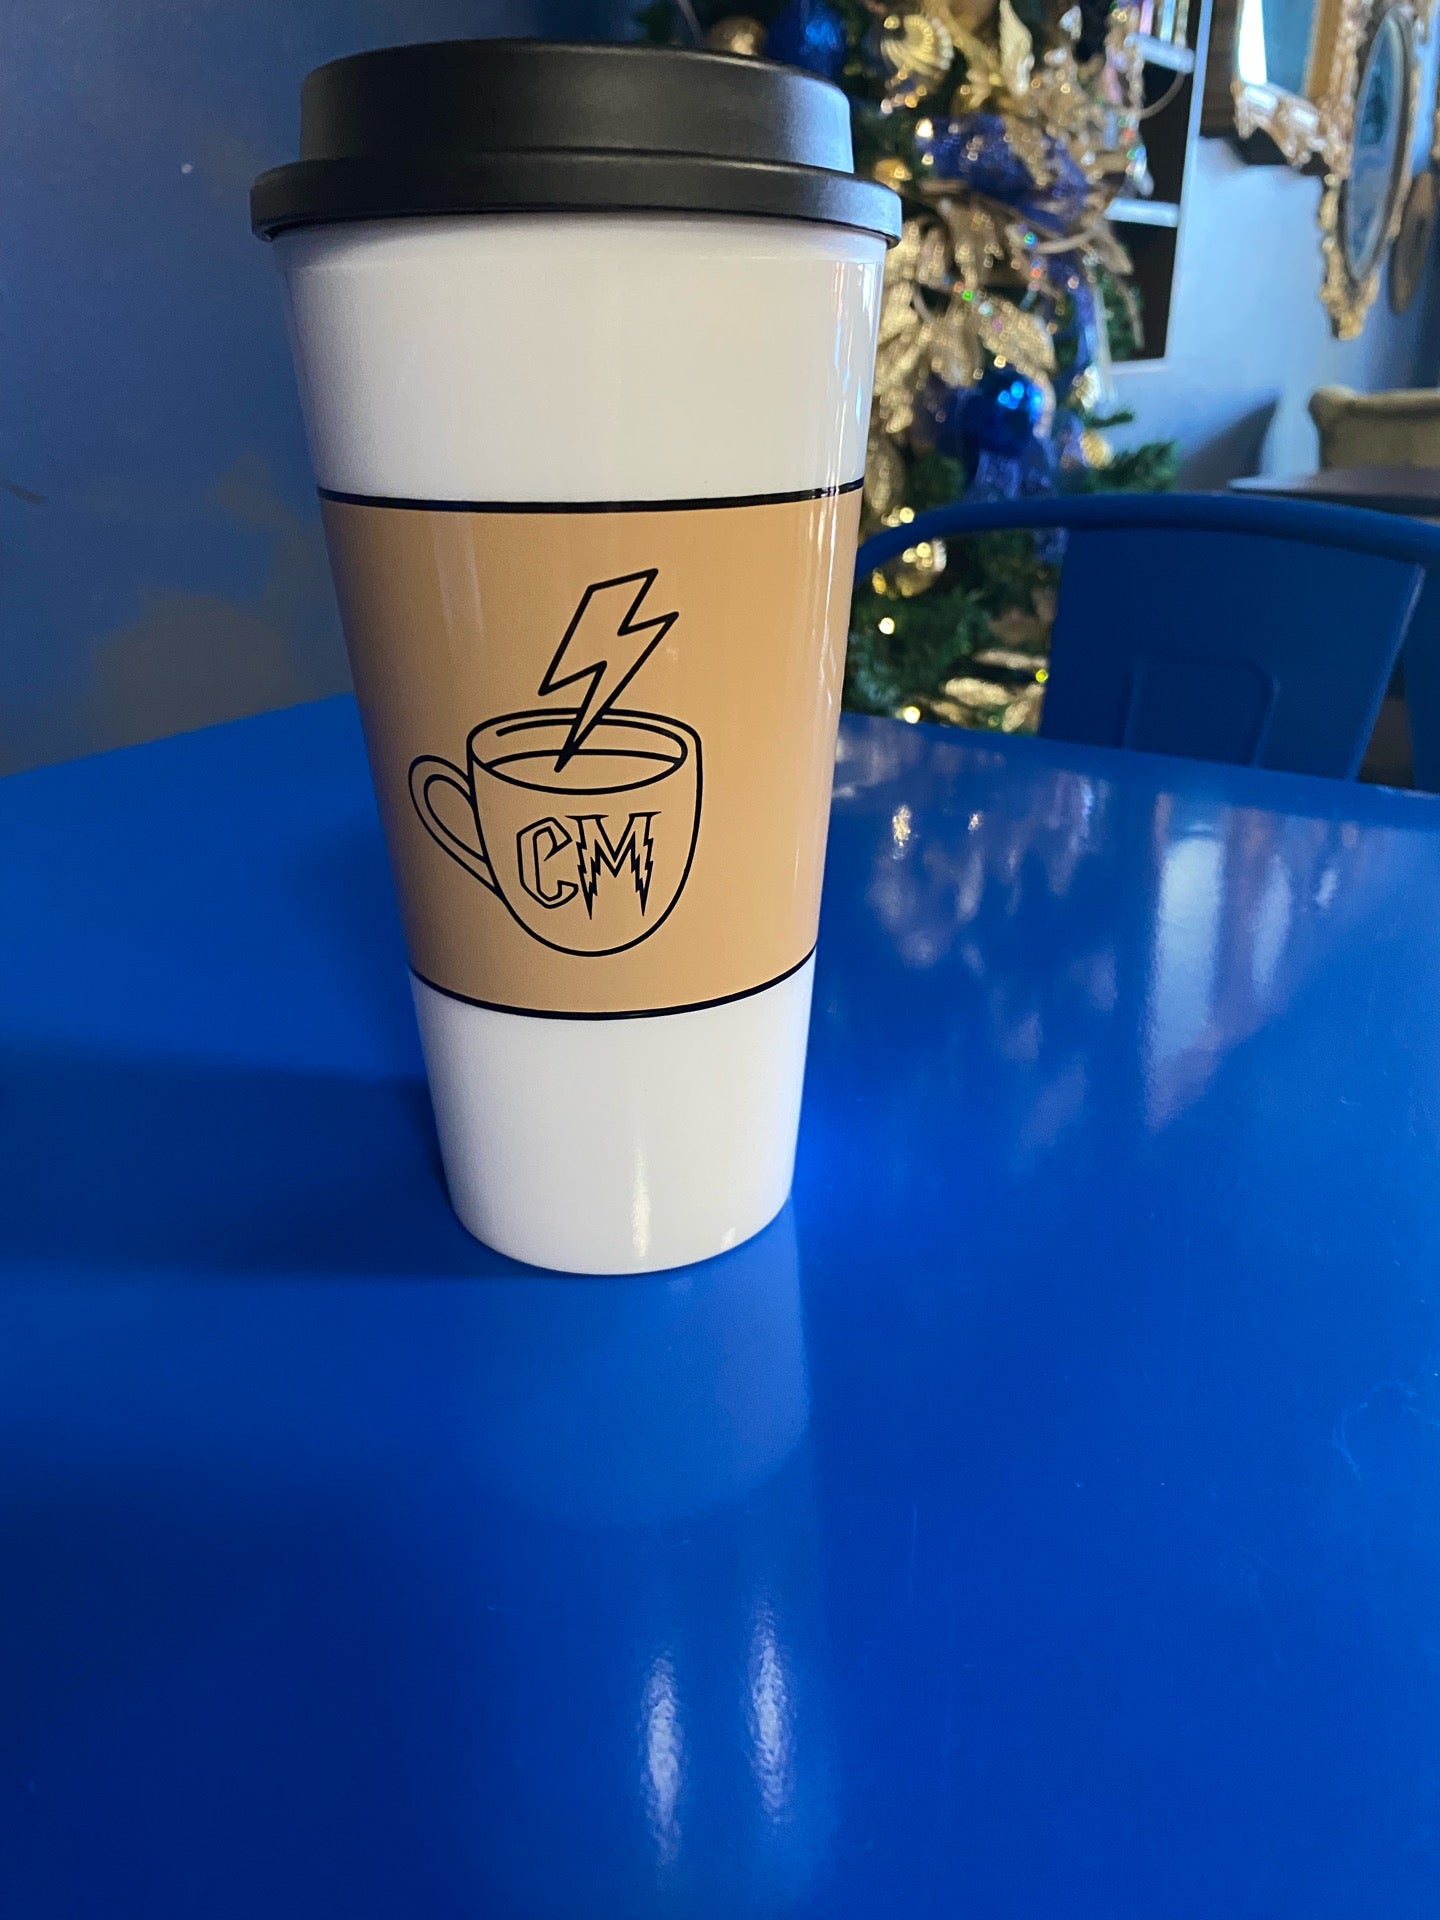 THE COFFEE MUGG - Coffee & Tea in Corpus Christi, Texas at 1112